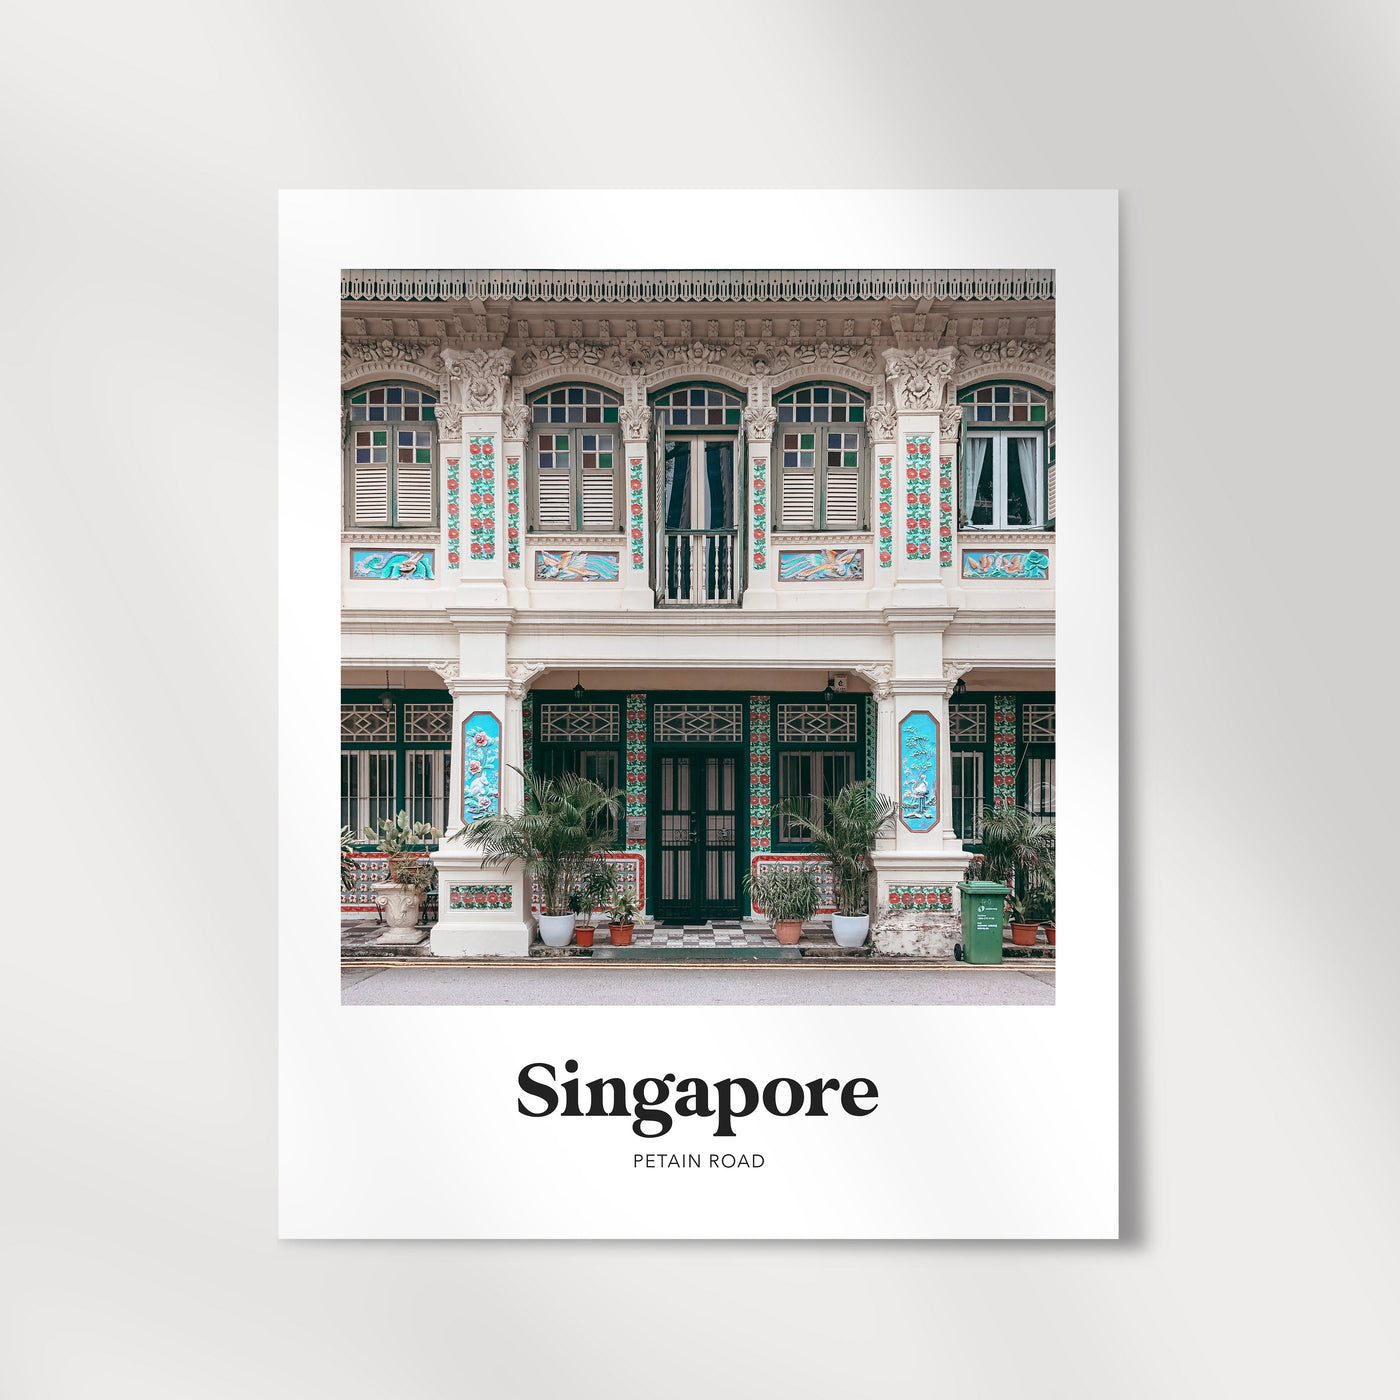 Singapore - Petain Road Shophouse Print